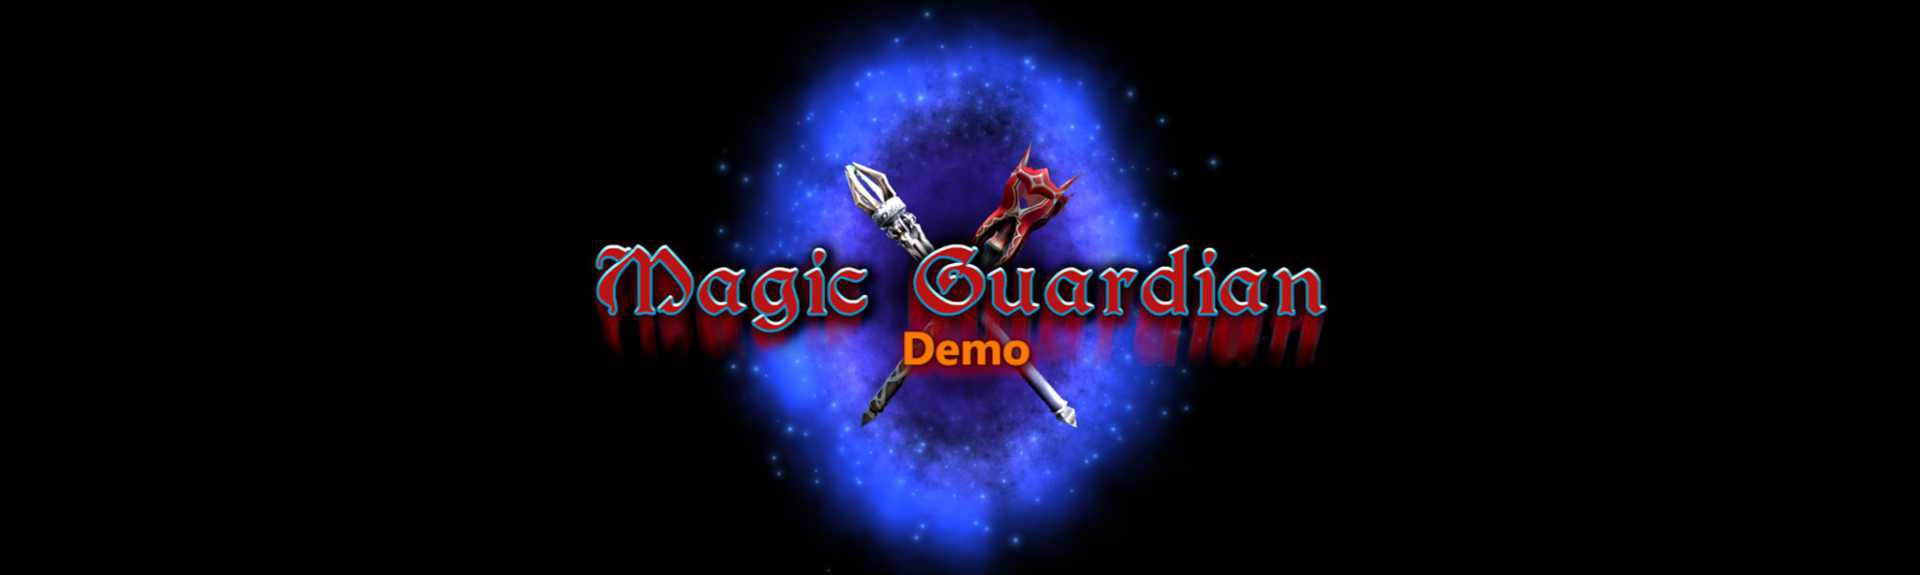 Magic Guardian Demo